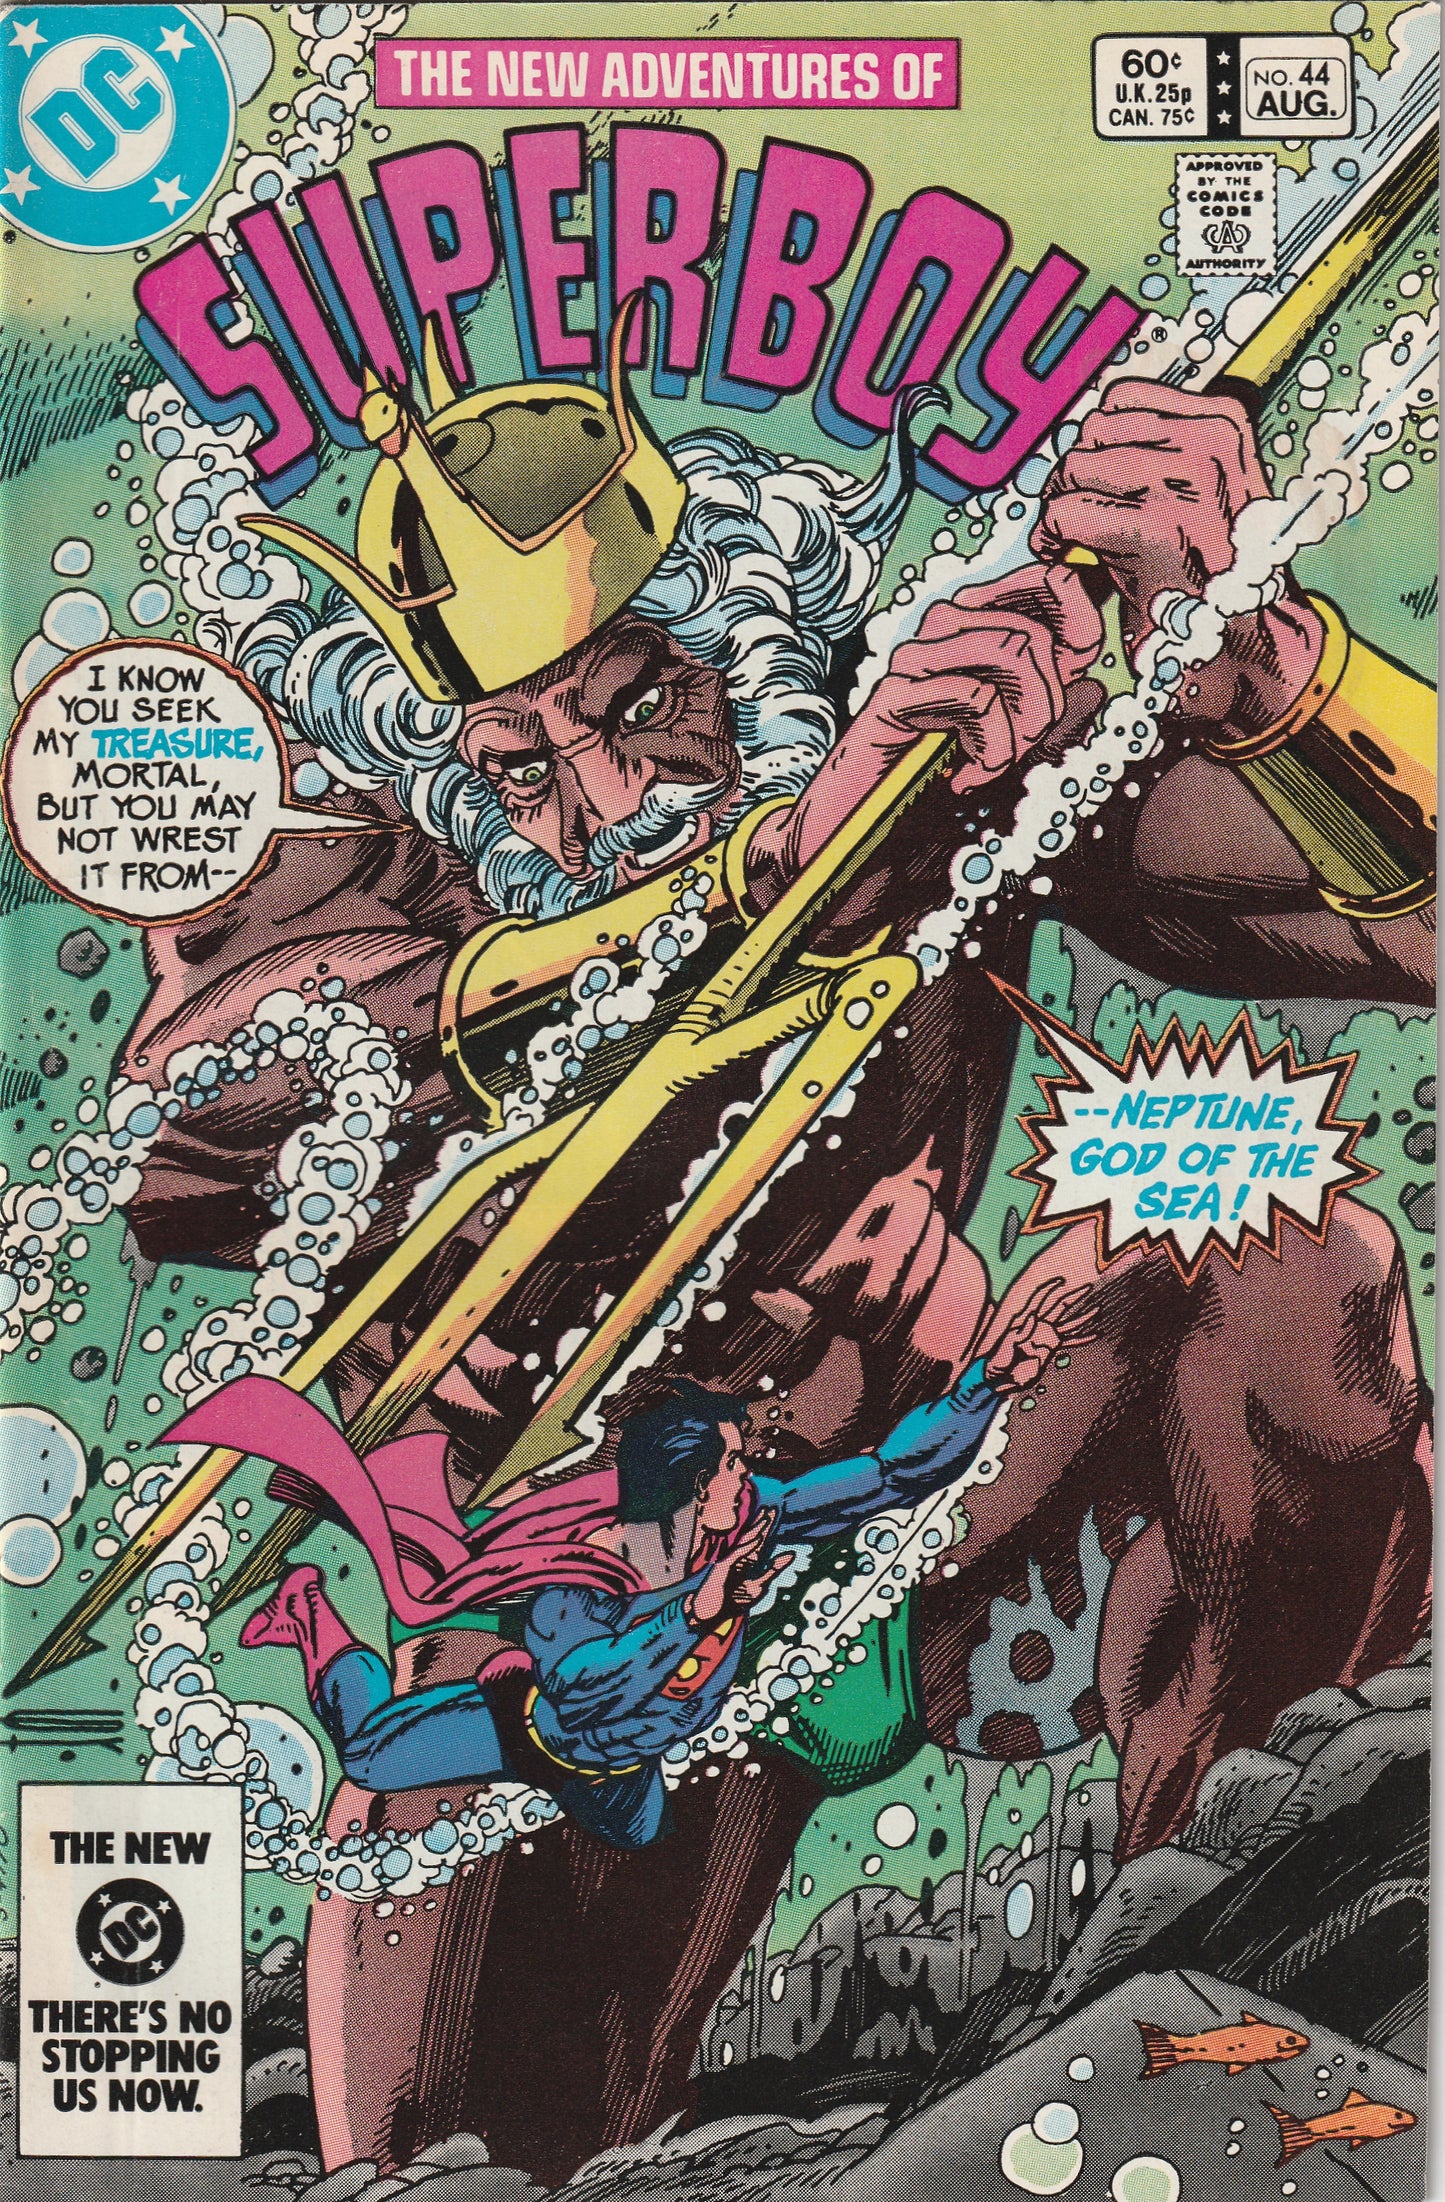 New Adventures of Superboy #44 (1983)